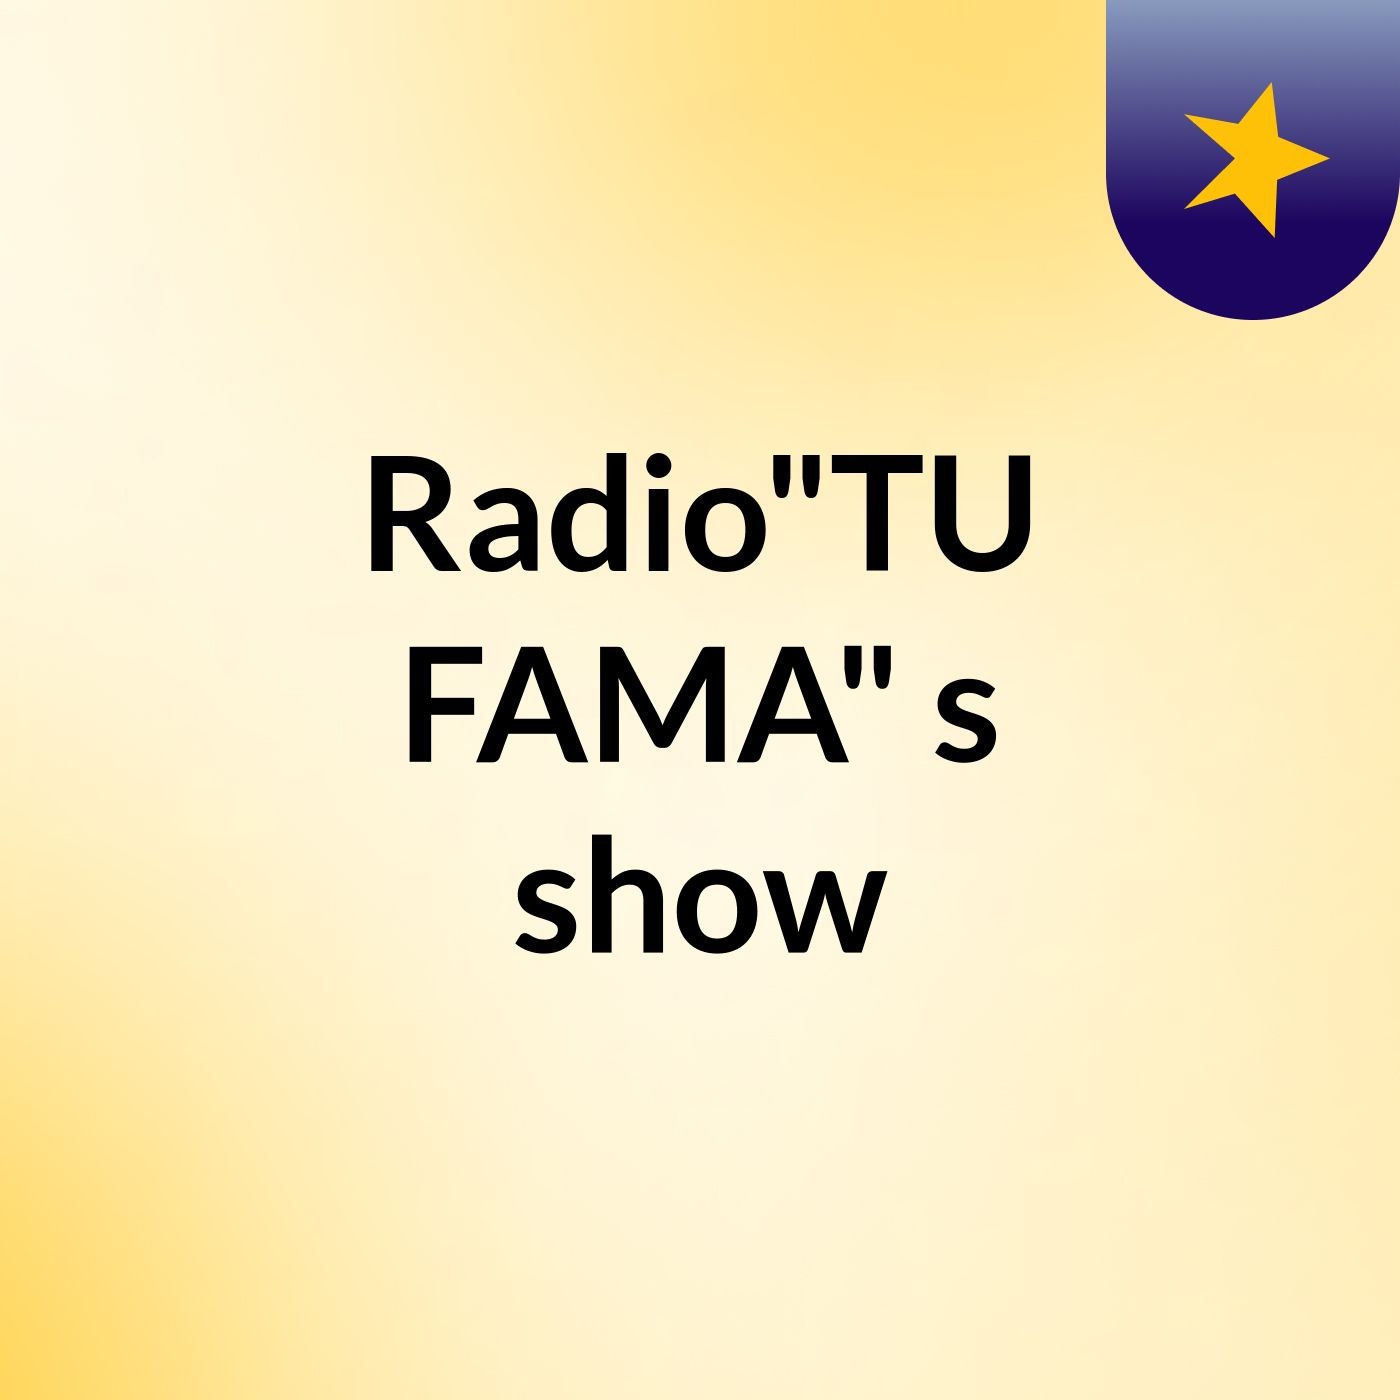 Radio"TU FAMA"'s show